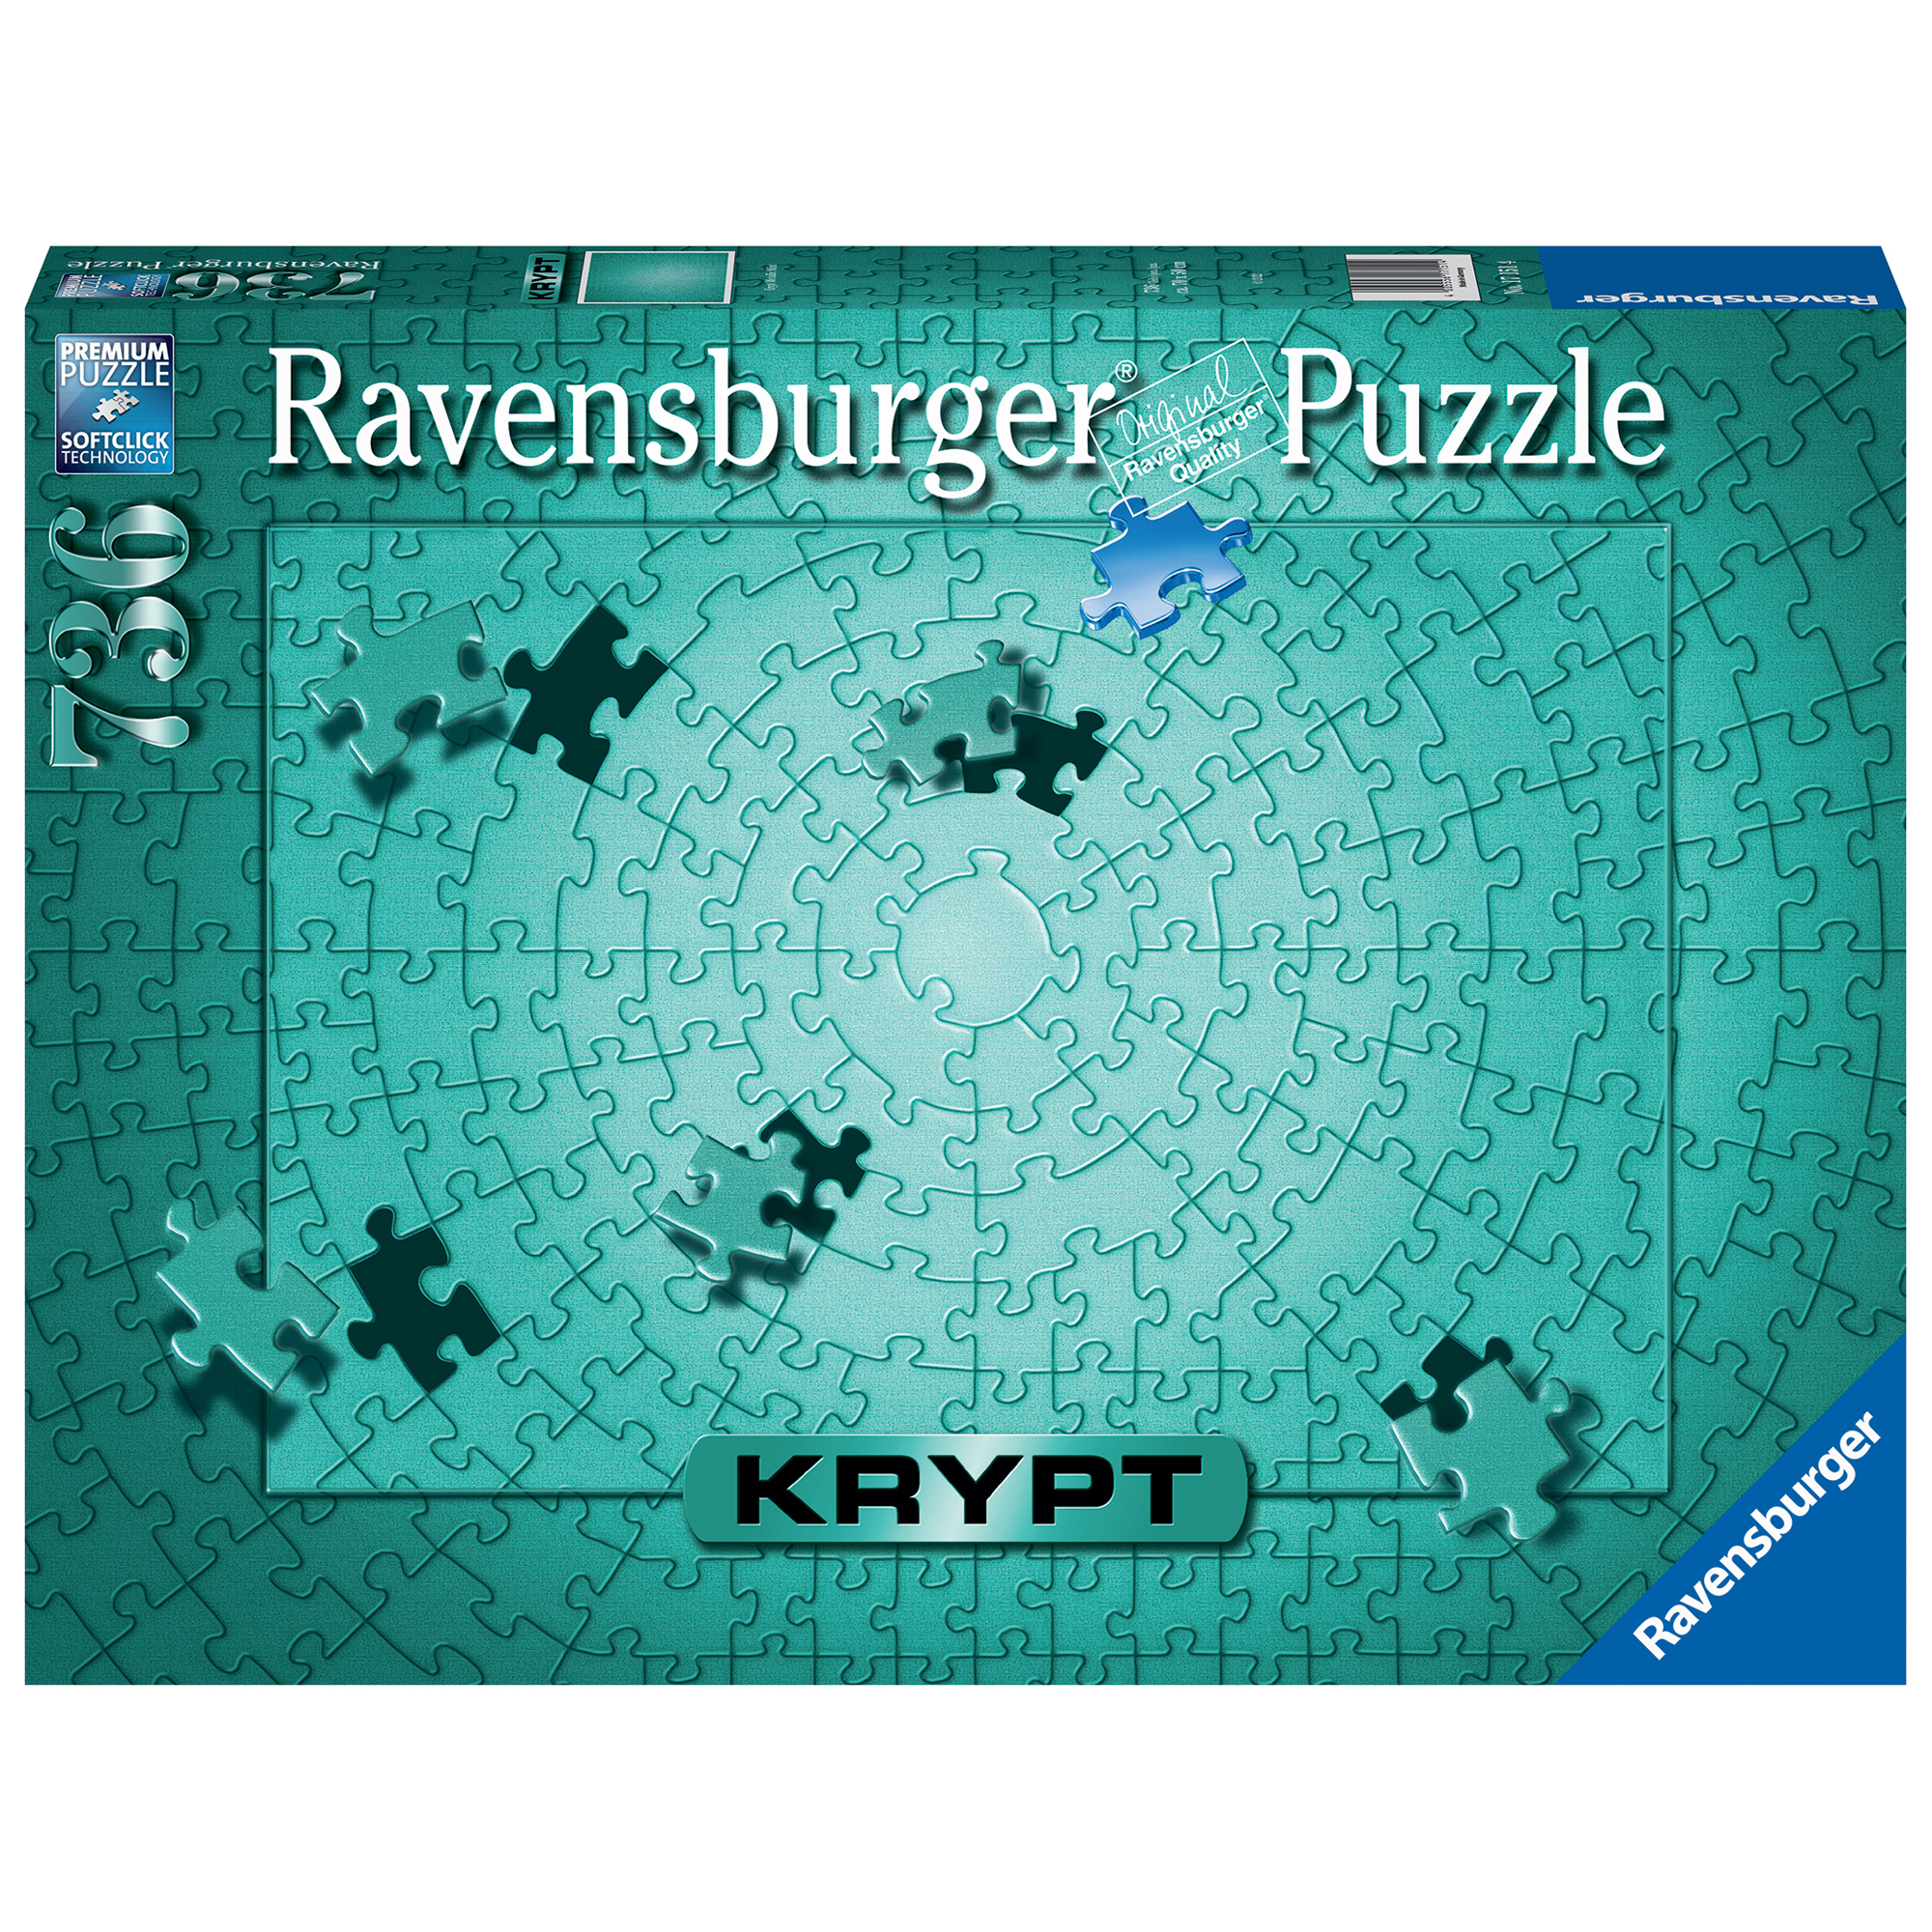 Ravensburger krypt puzzle metallic mint, 736 pezzi - Ravensburger